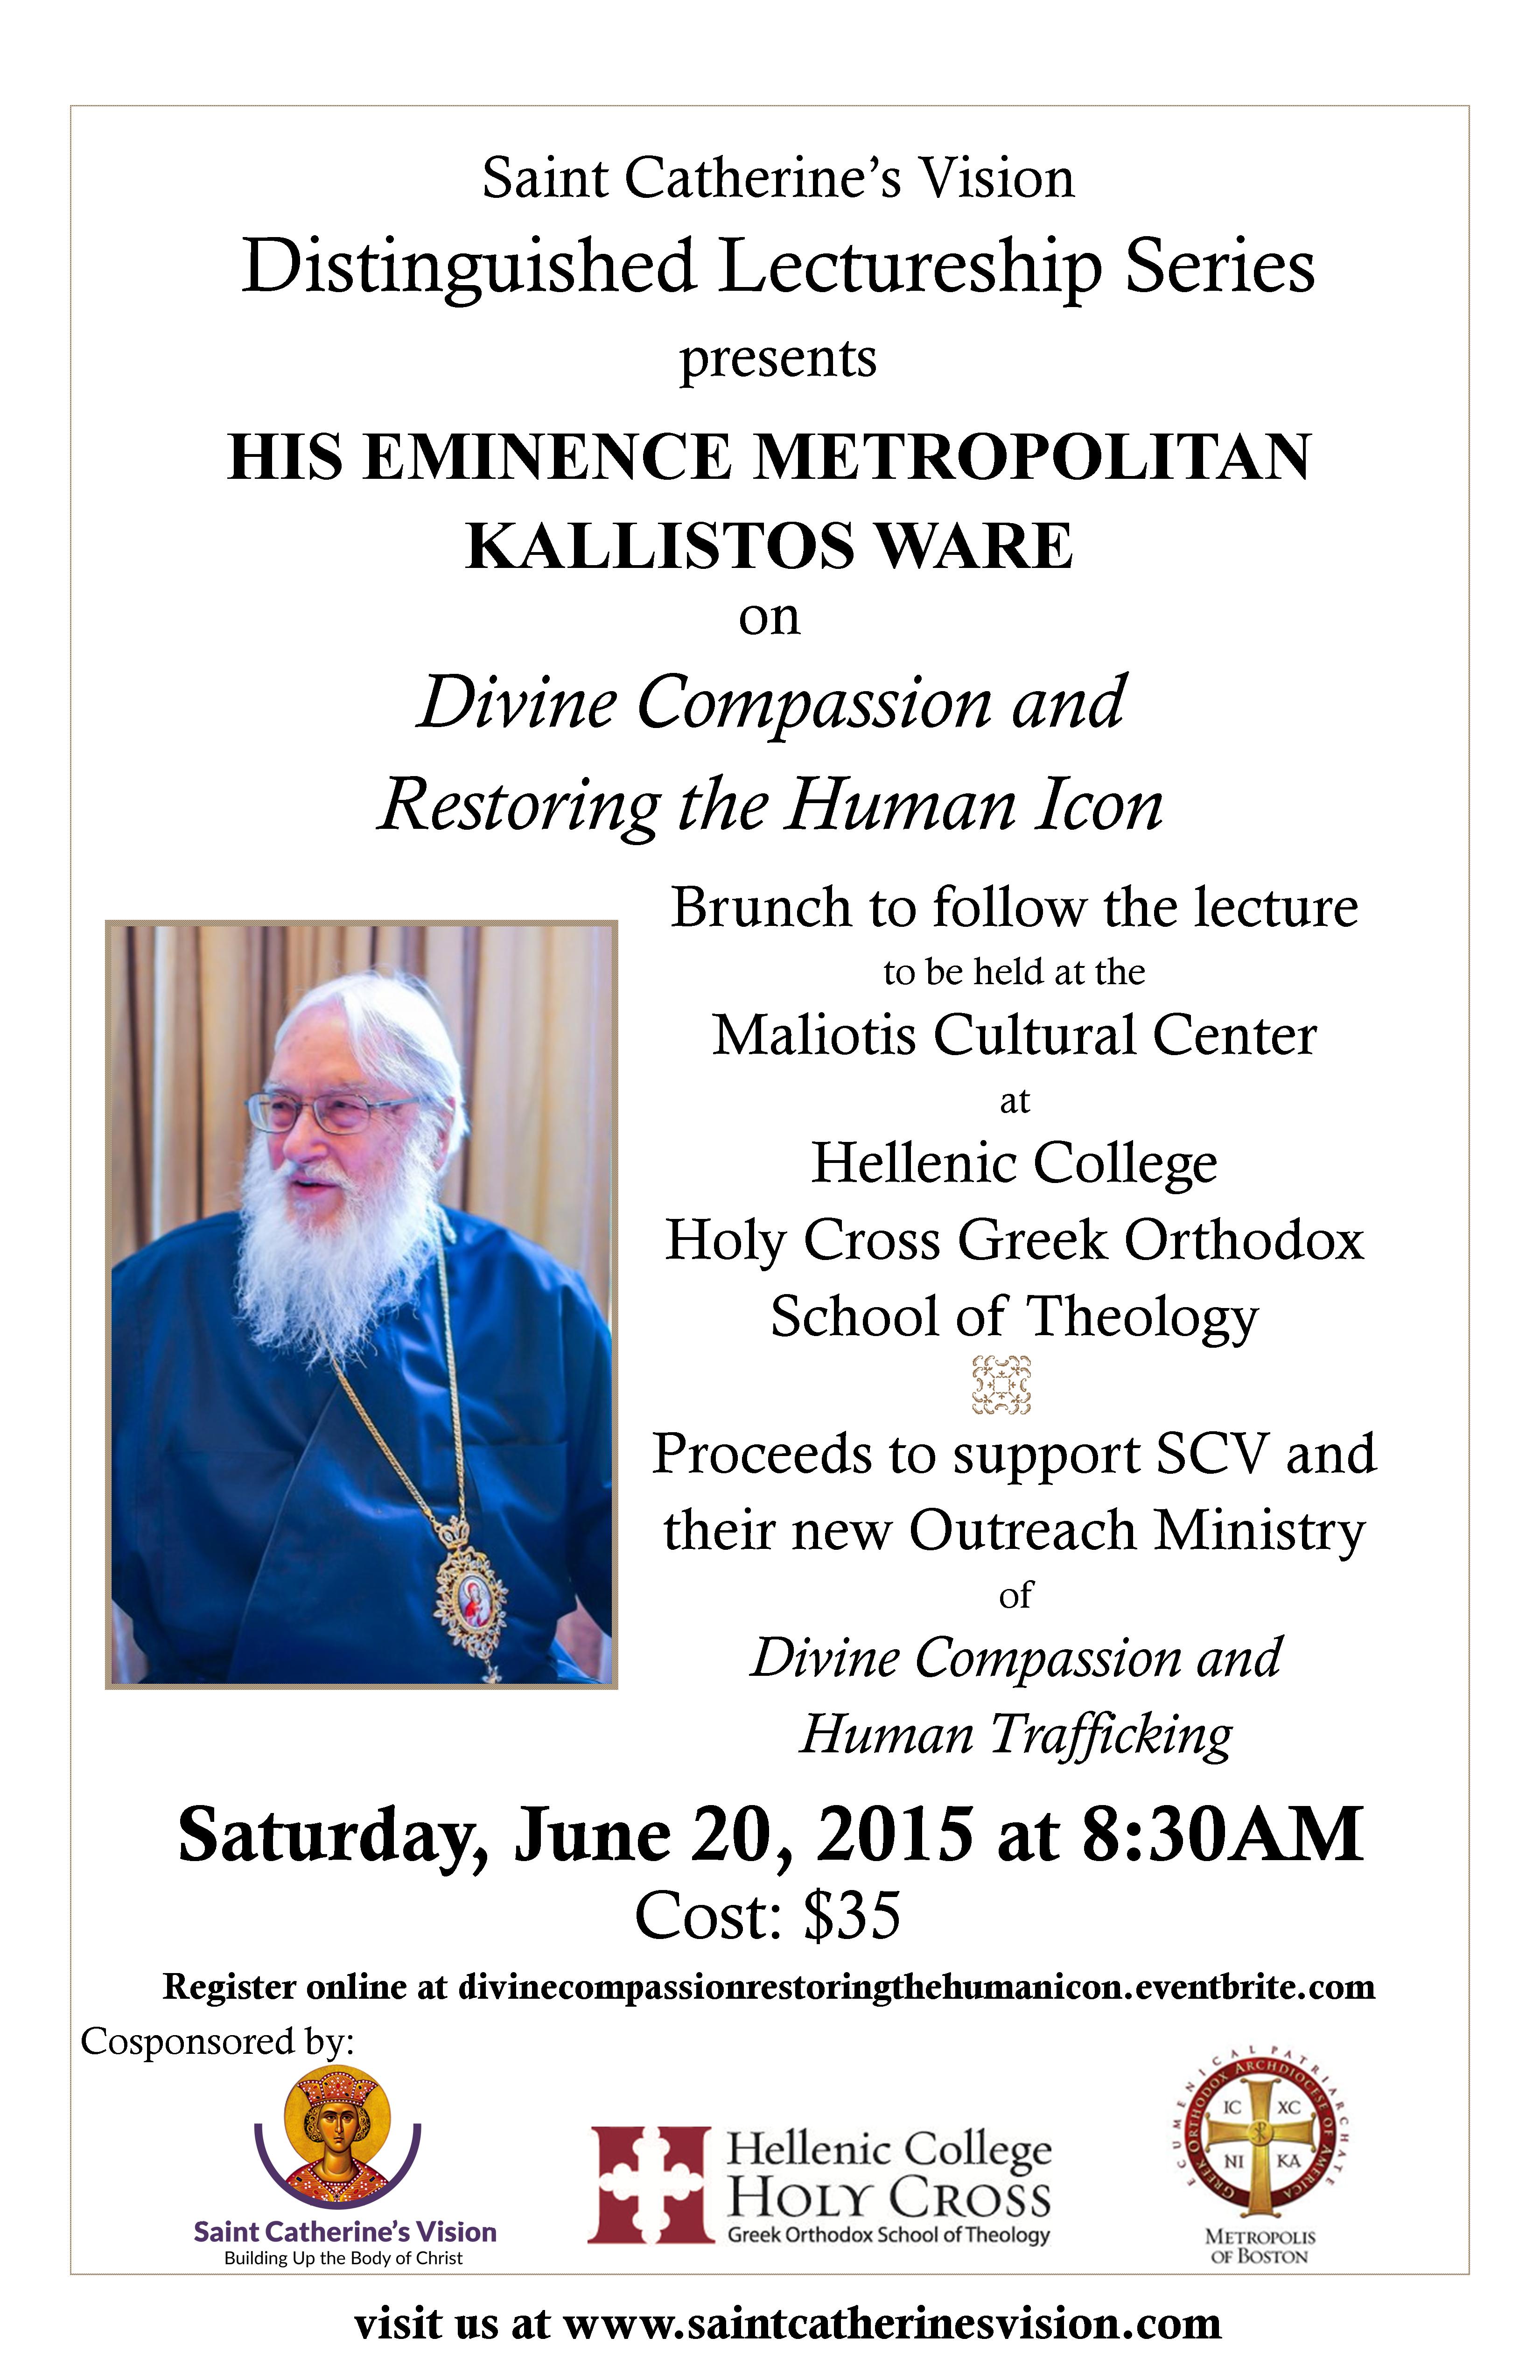 Metropolitan Kallistos Ware to Lecture on ‘Divine Compassion & Restoring the Human Icon’